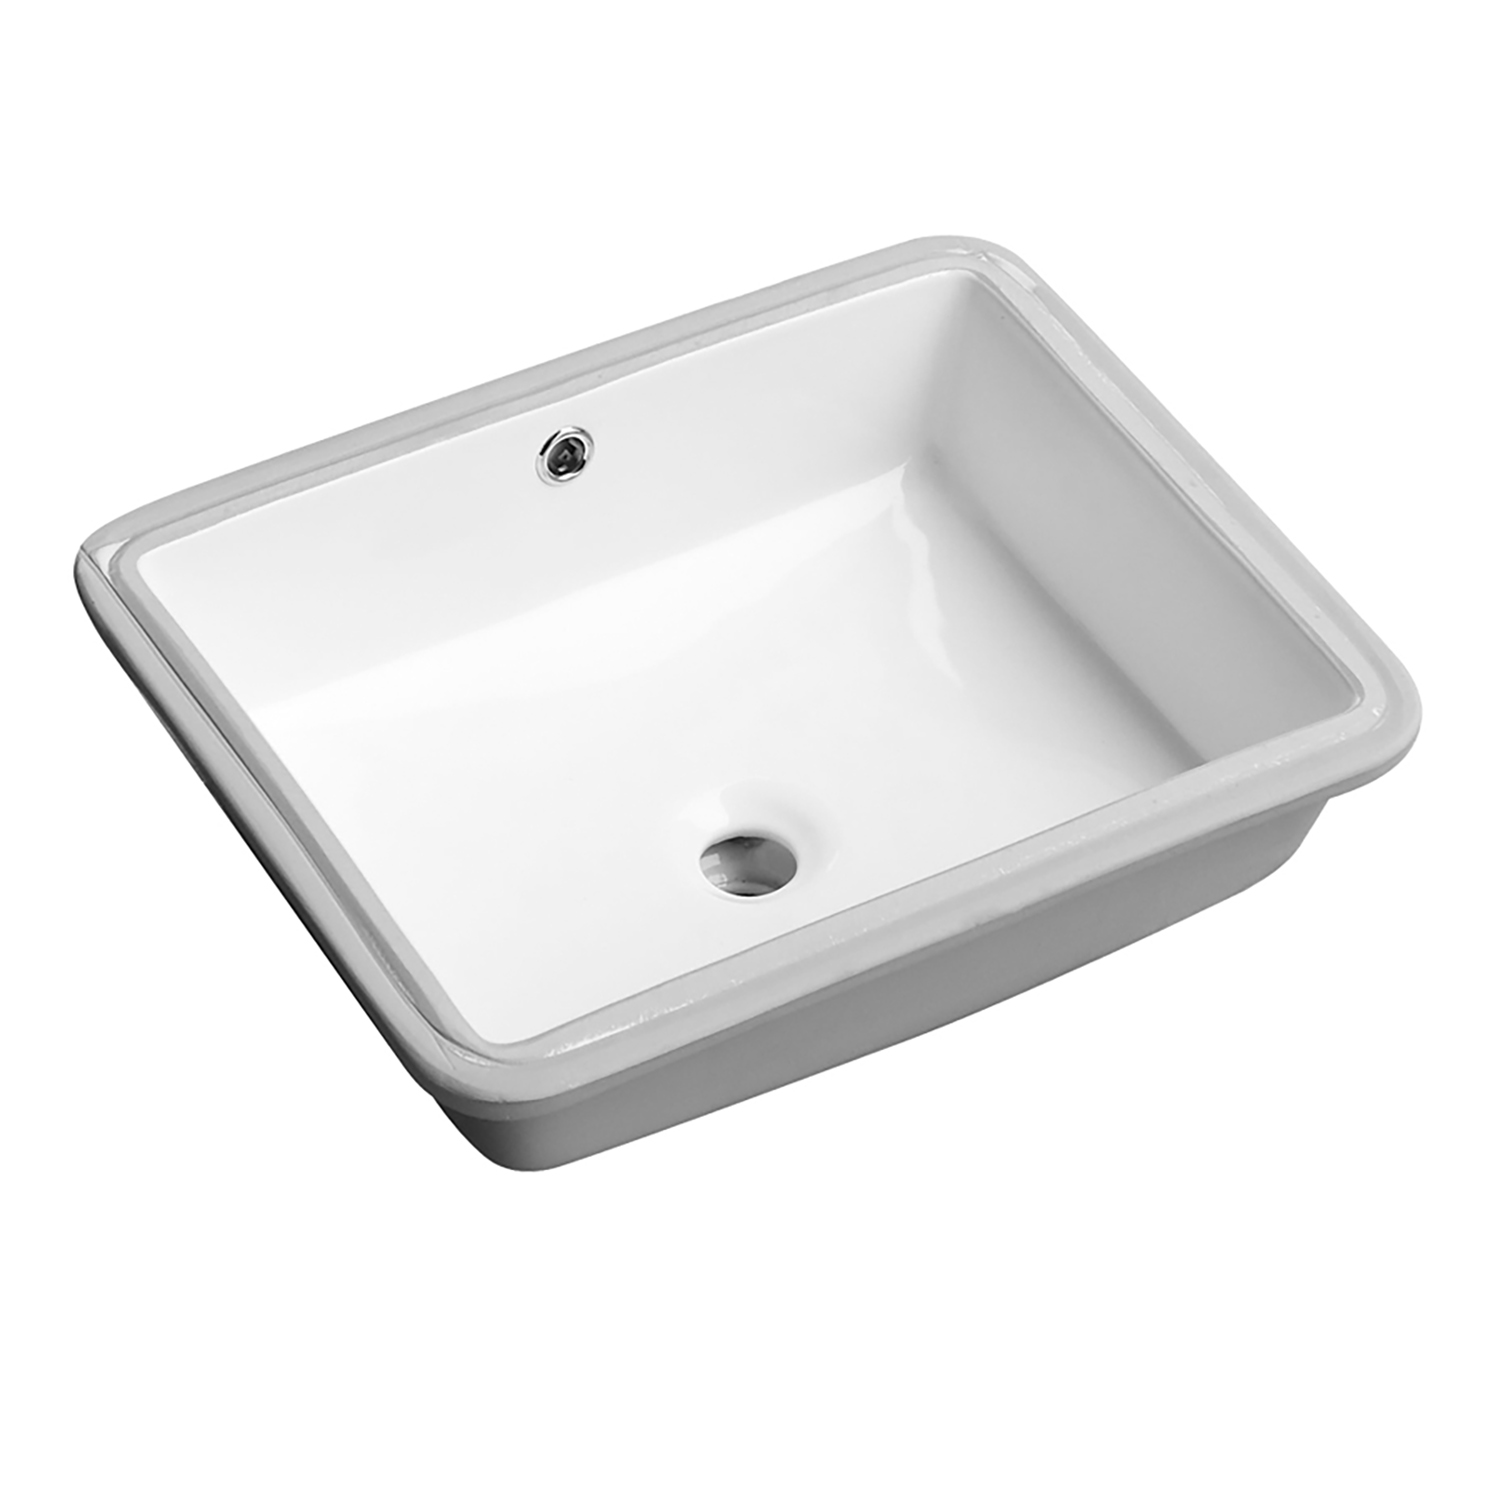 C1337 19" x 15" White Square Ceramic Undermount Bathroom Vanity Vessel Sink